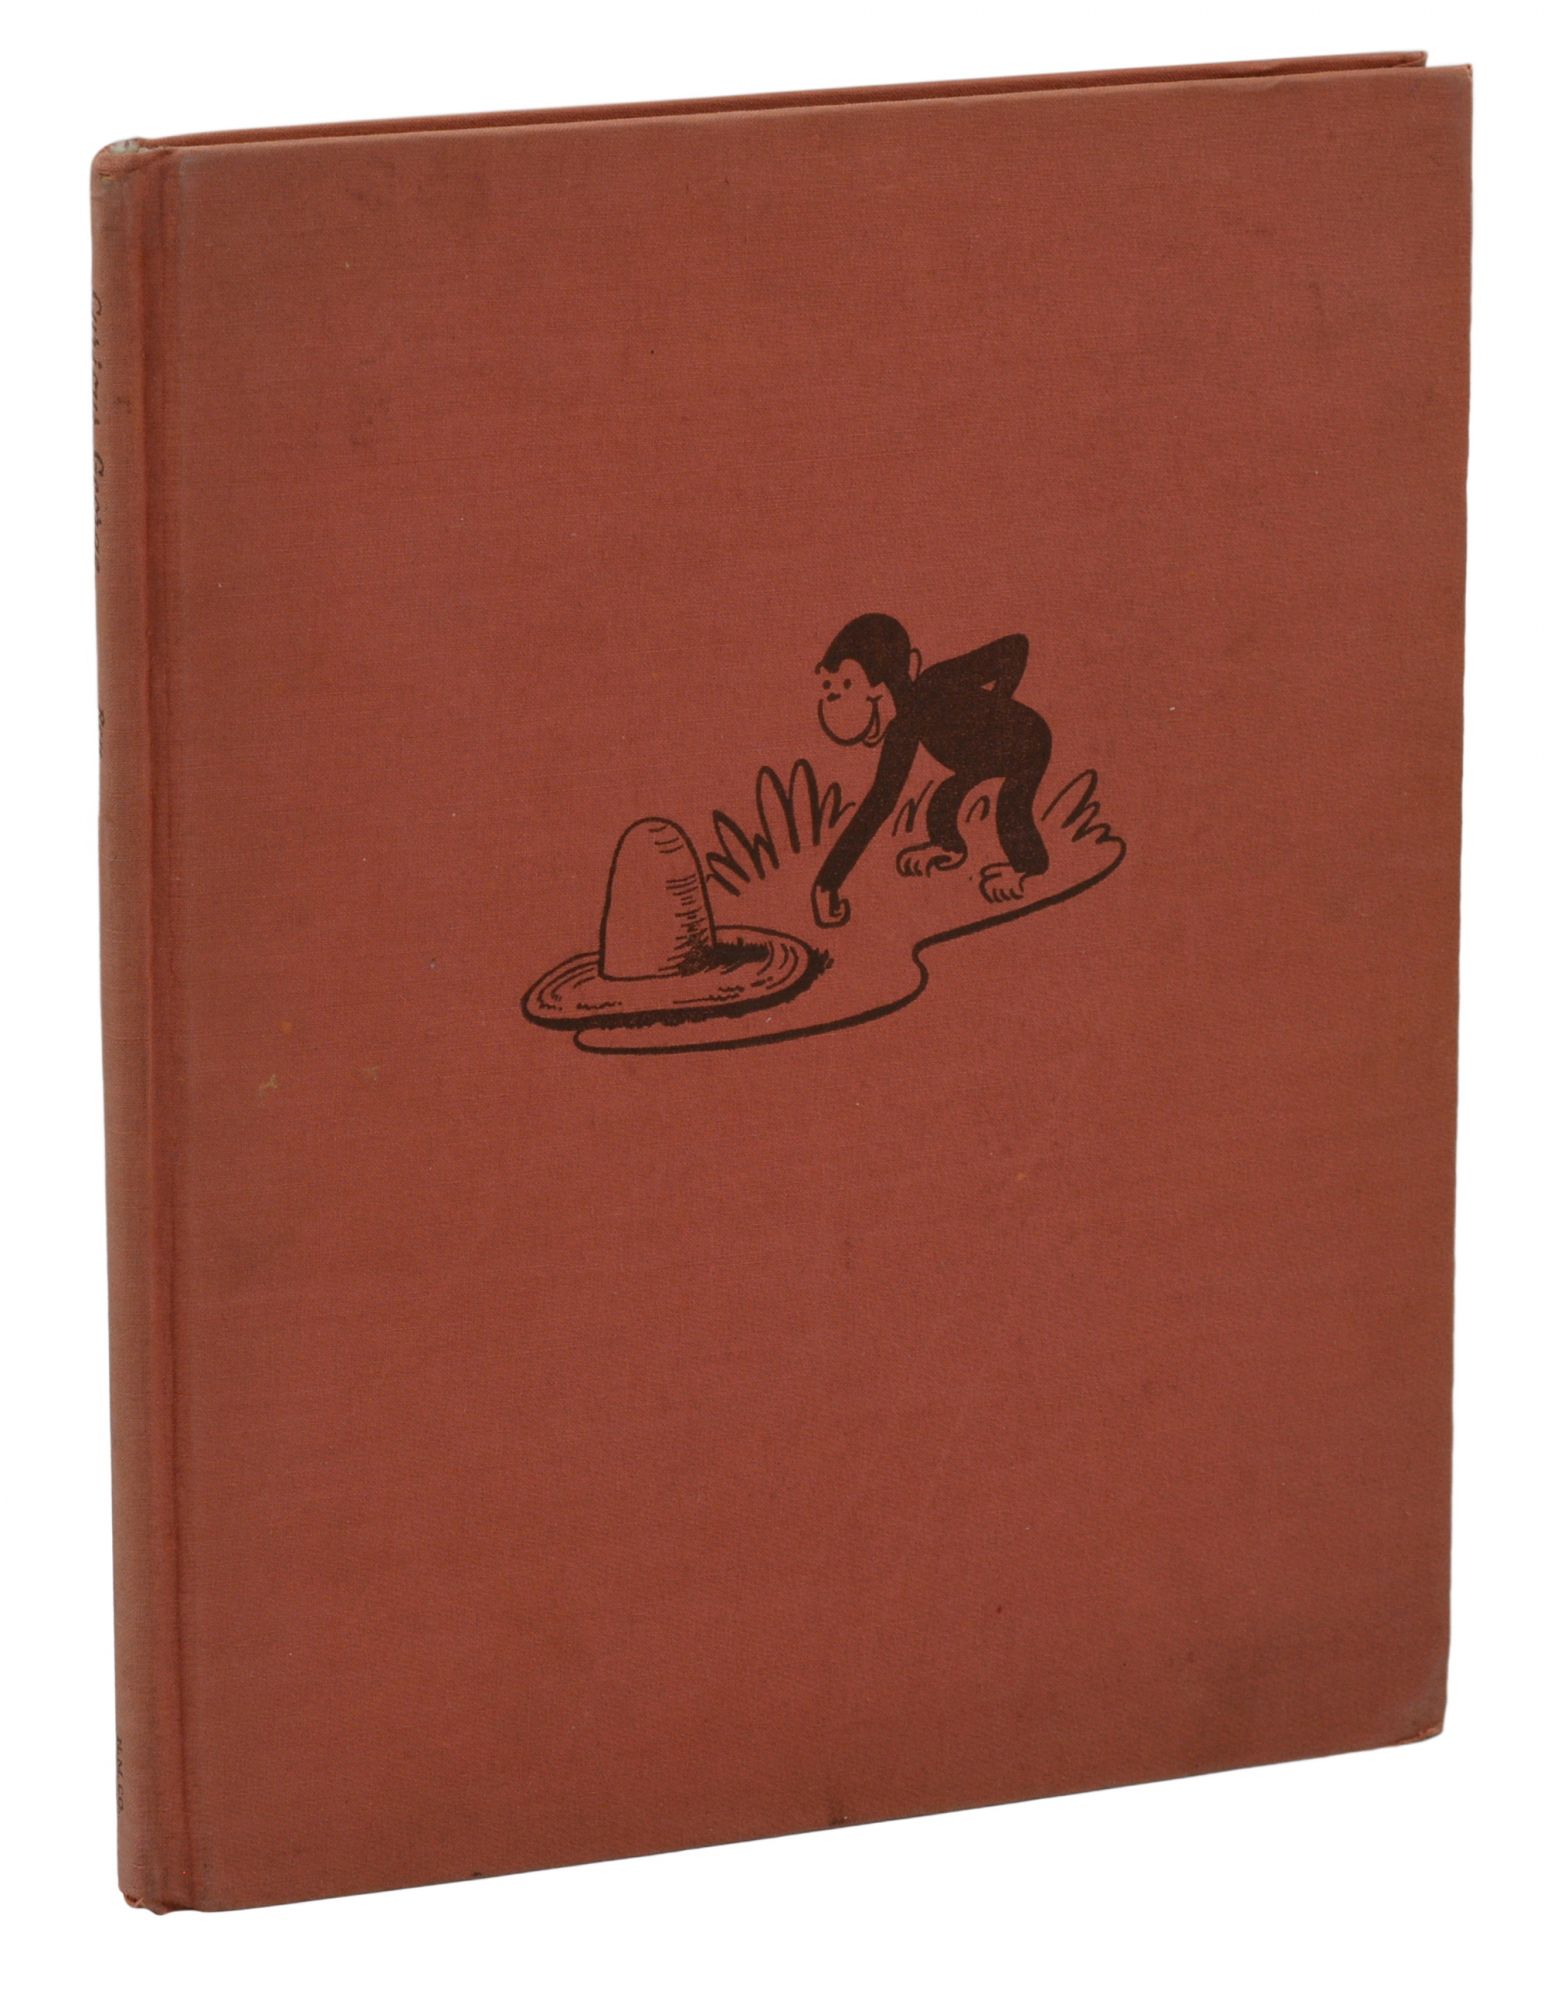 Curious George Von Rey H A Very Good 1941 First Edition